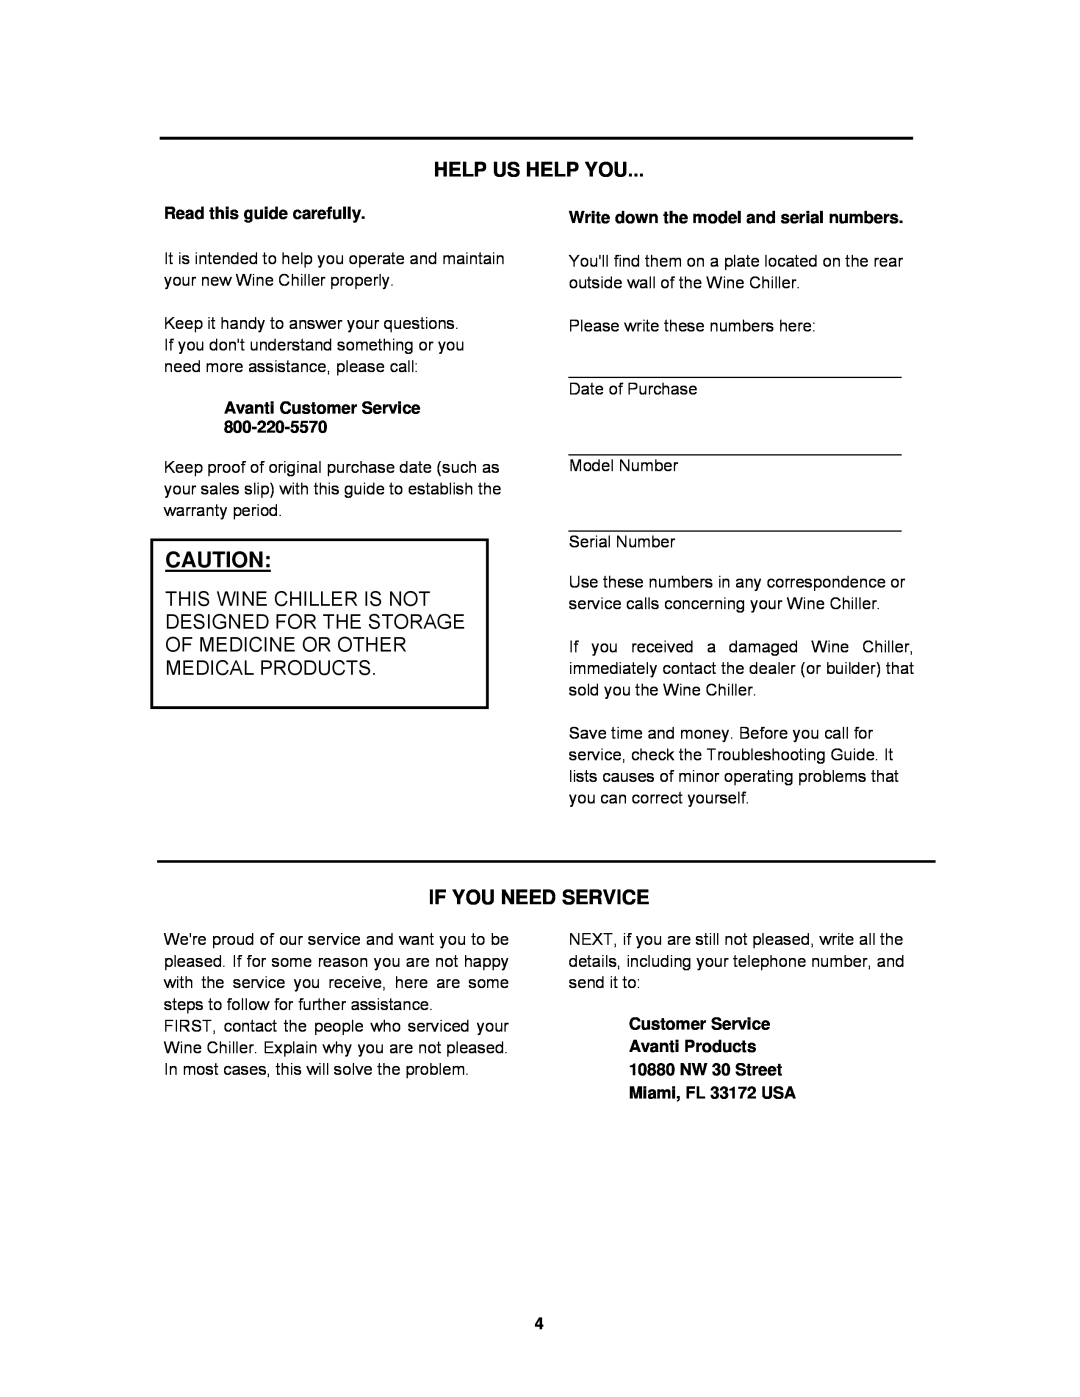 Avanti EWC1801DZ Help Us Help You, If You Need Service, Read this guide carefully, Avanti Customer Service 